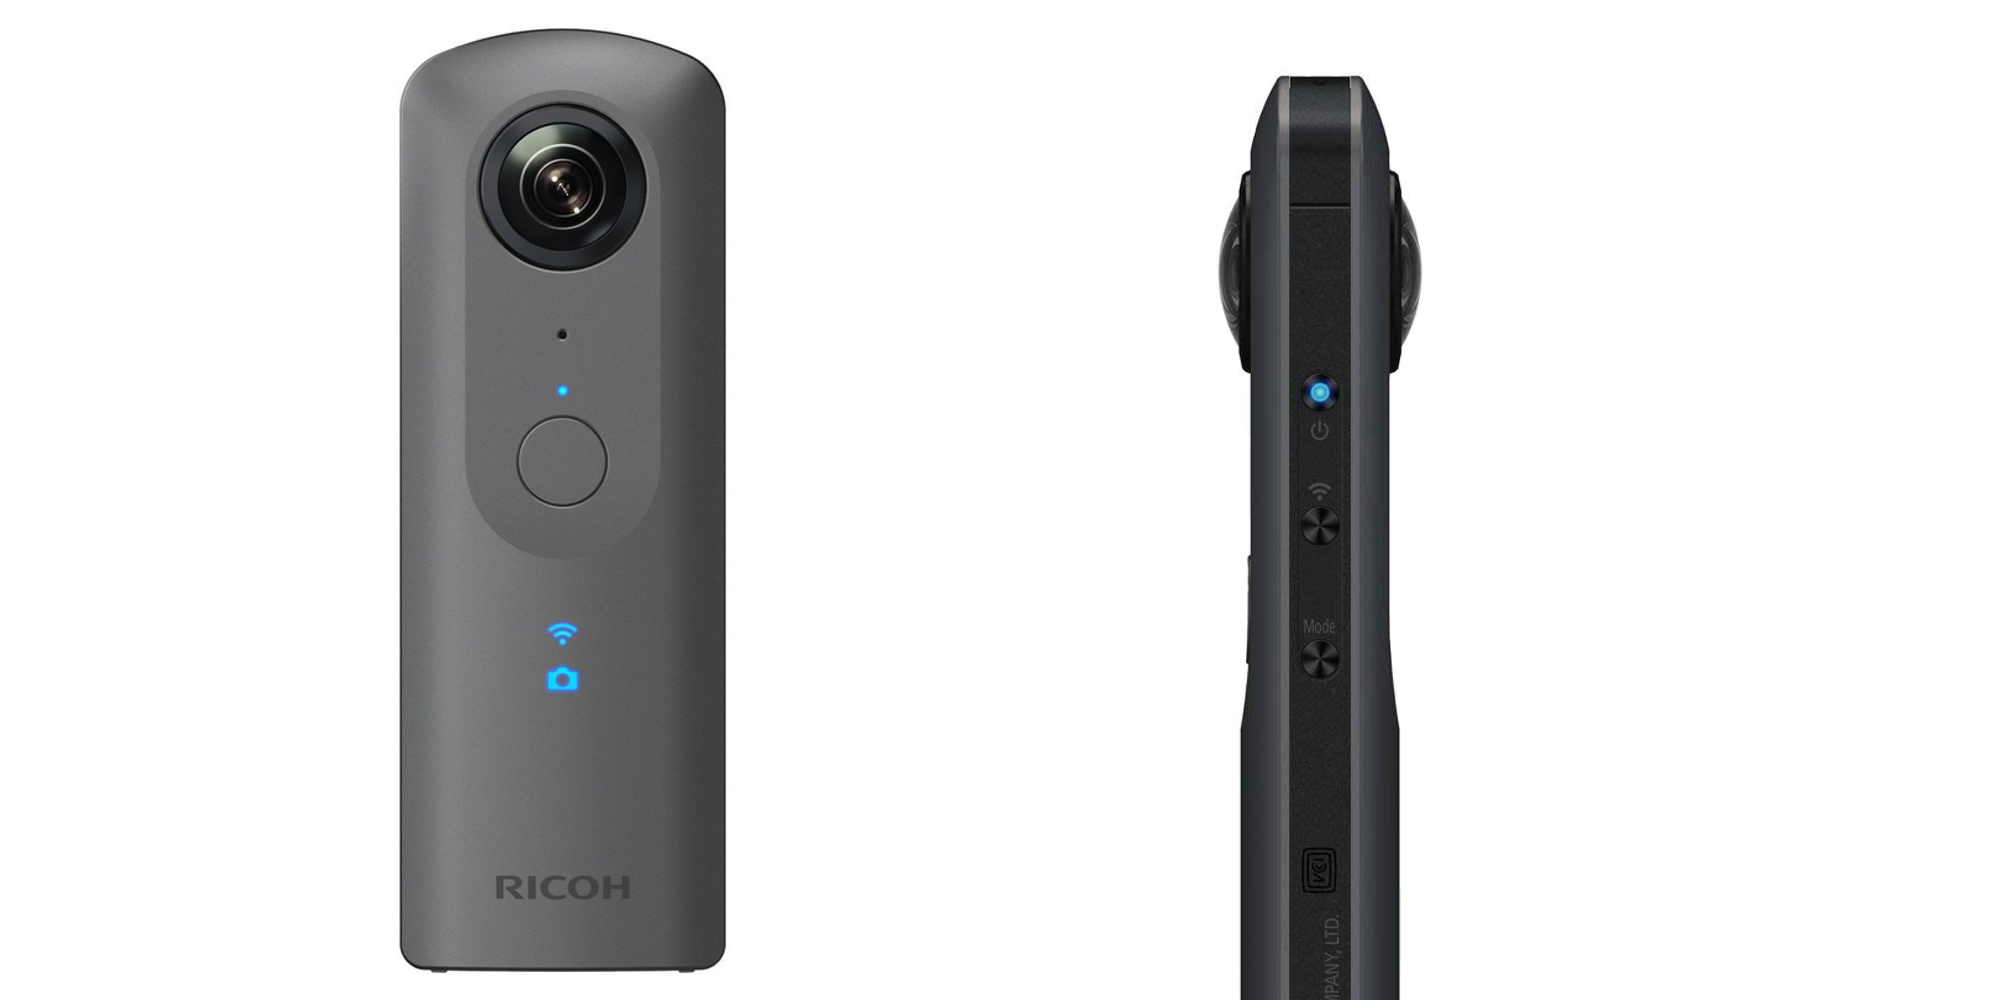 Record 4K 360-degree videos with Ricoh's THETA V VR Camera at $349